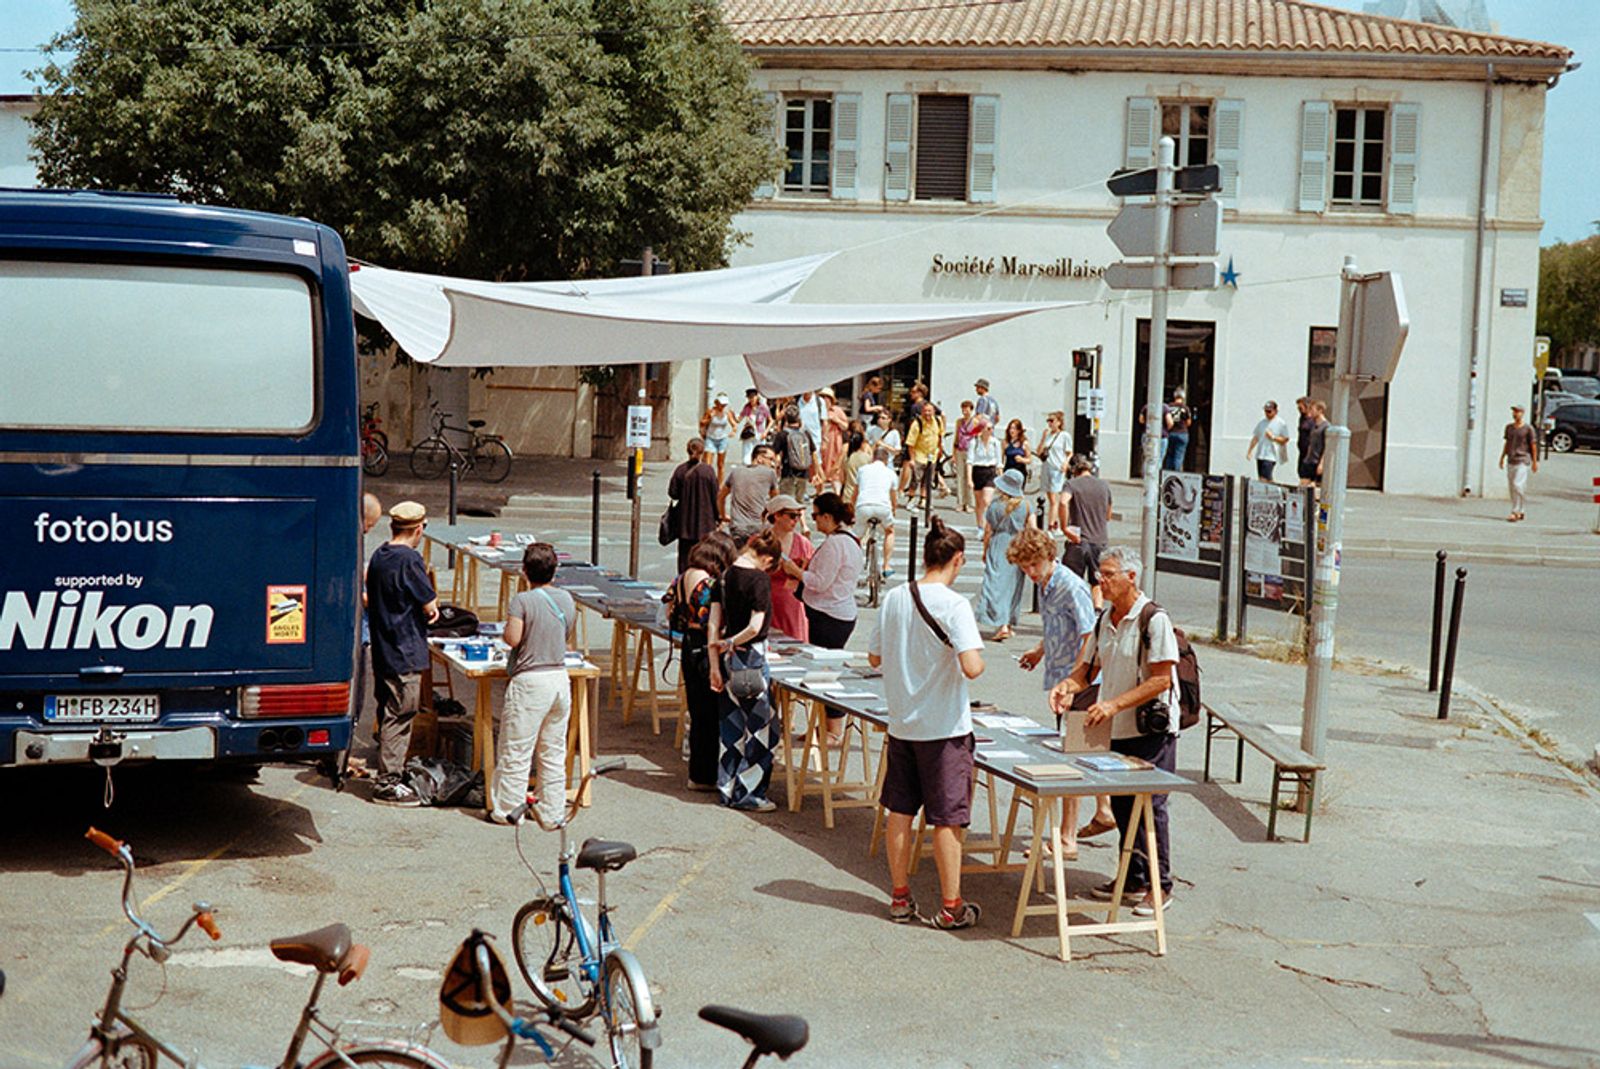 Fotobus during during the Rencontres d’Arles © Fabian Niebauer